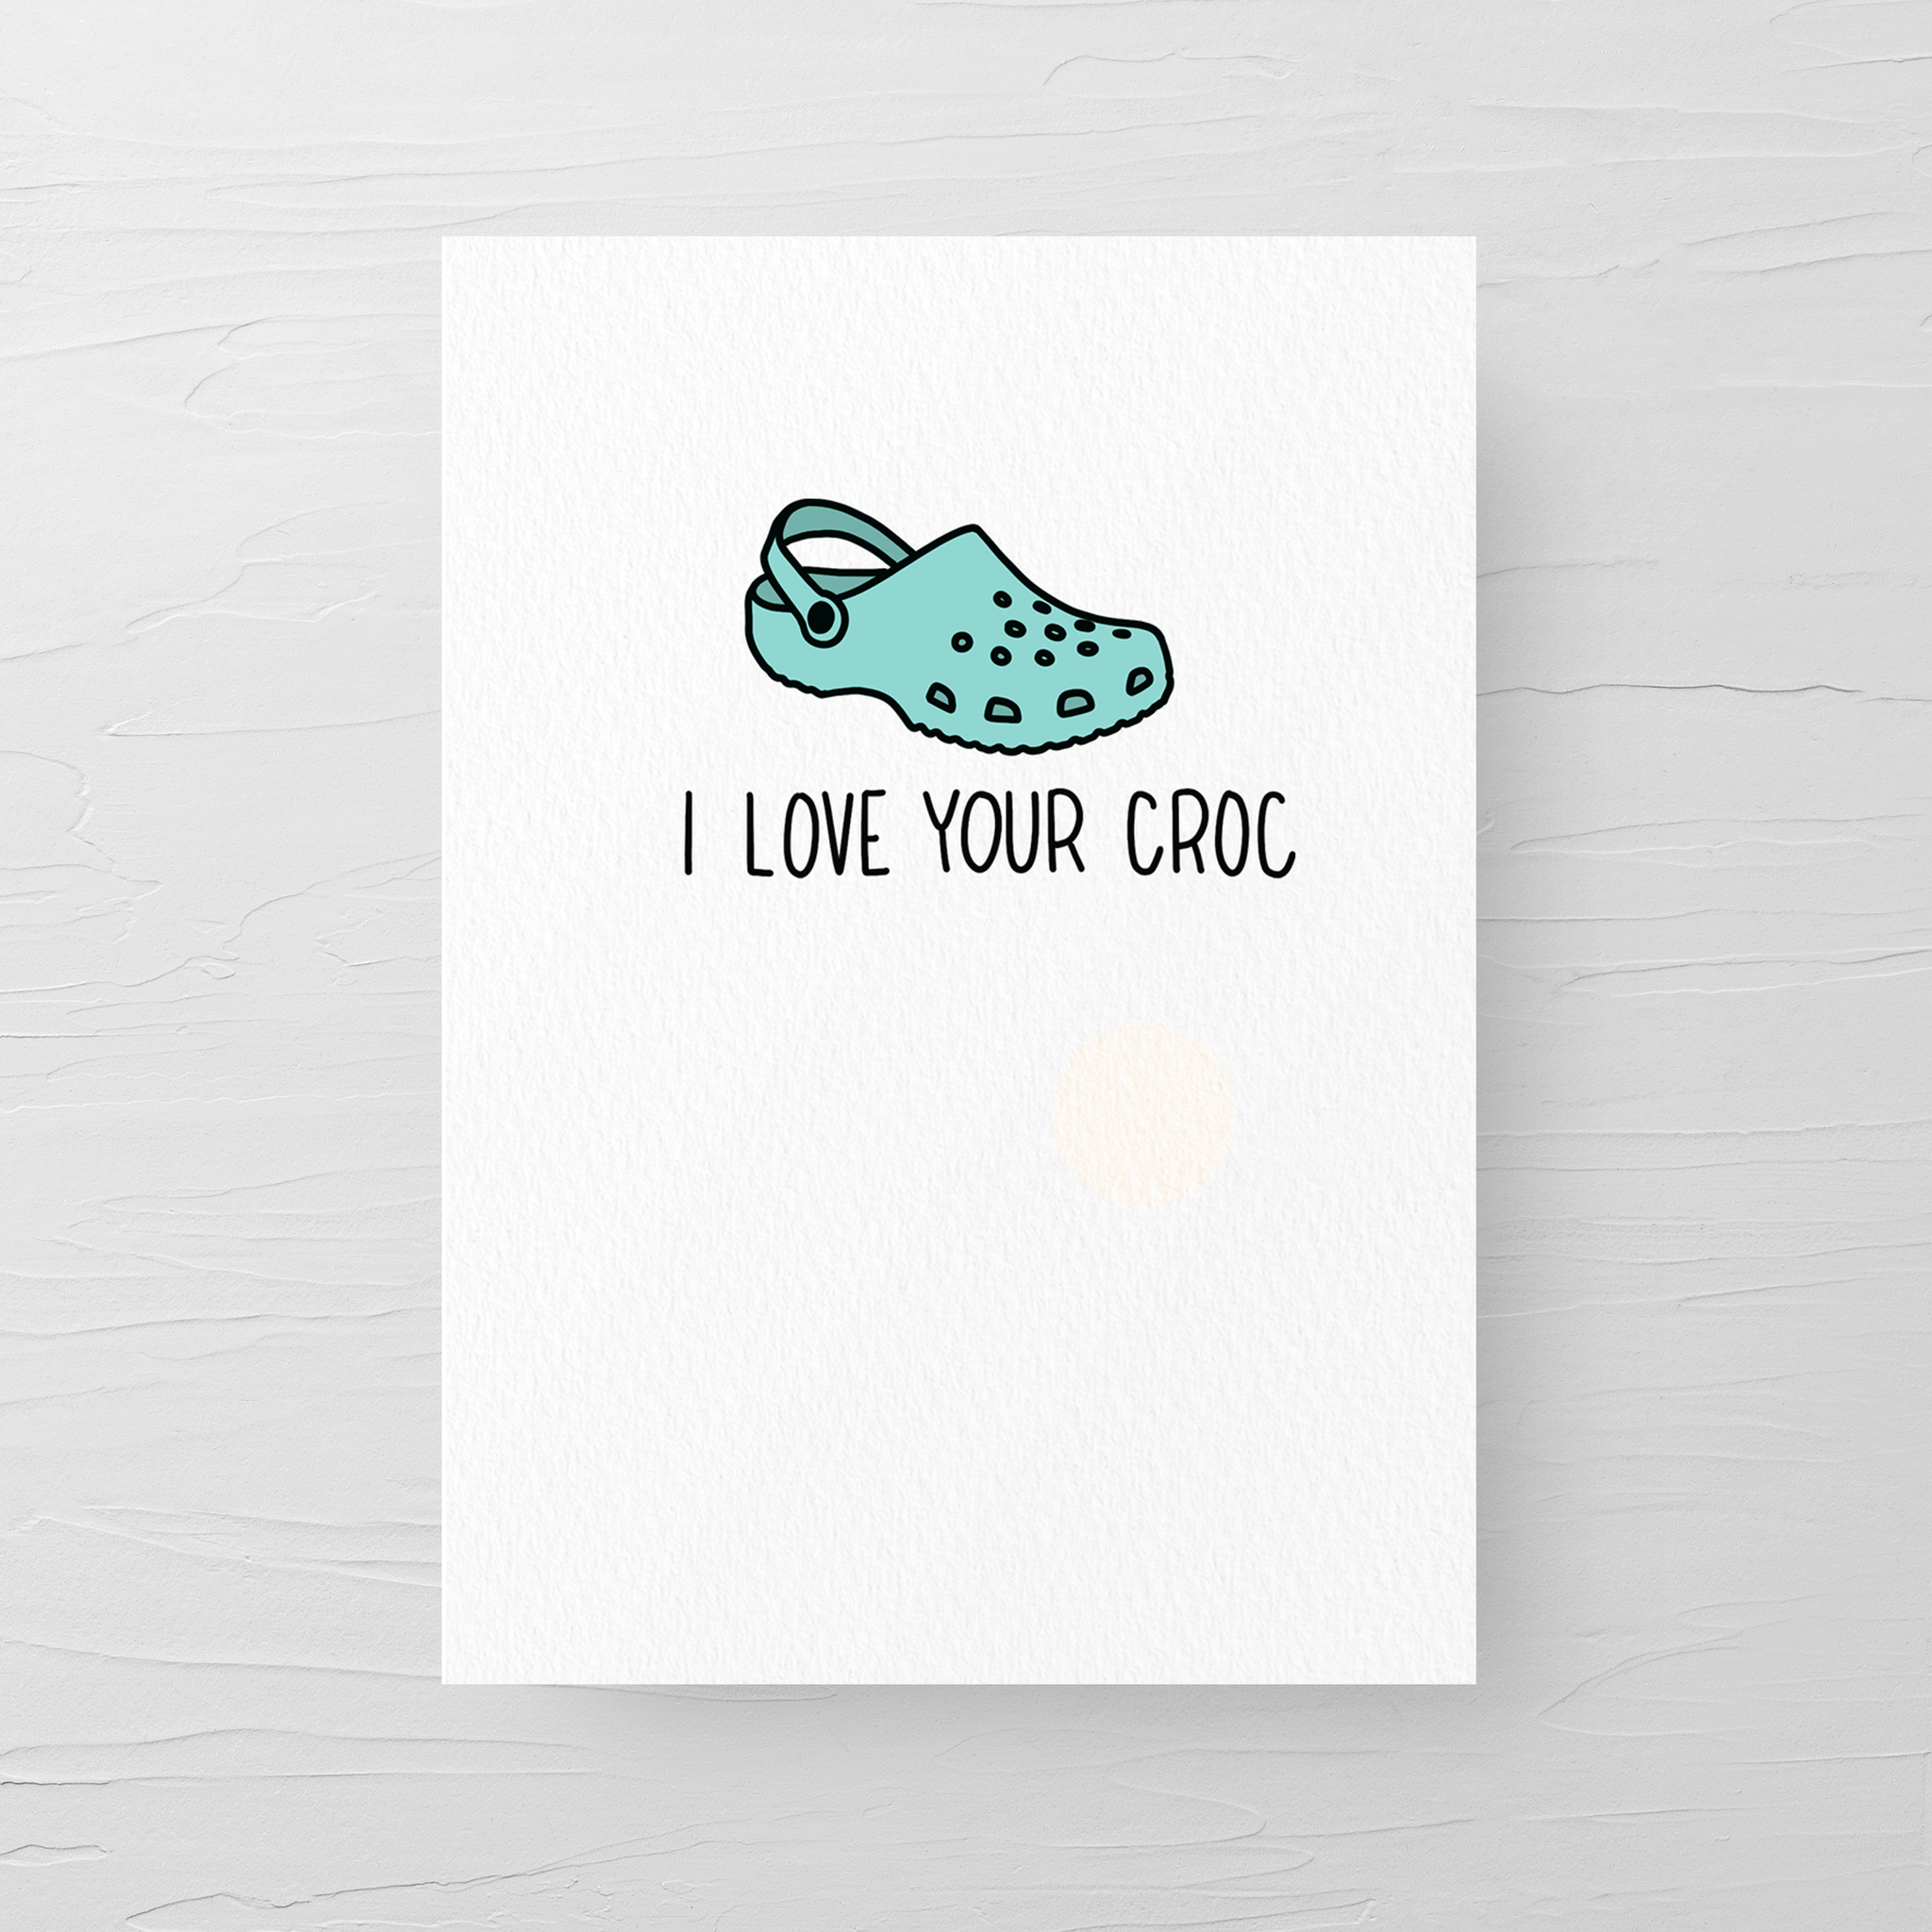 I LOVE YOUR CROC CARD